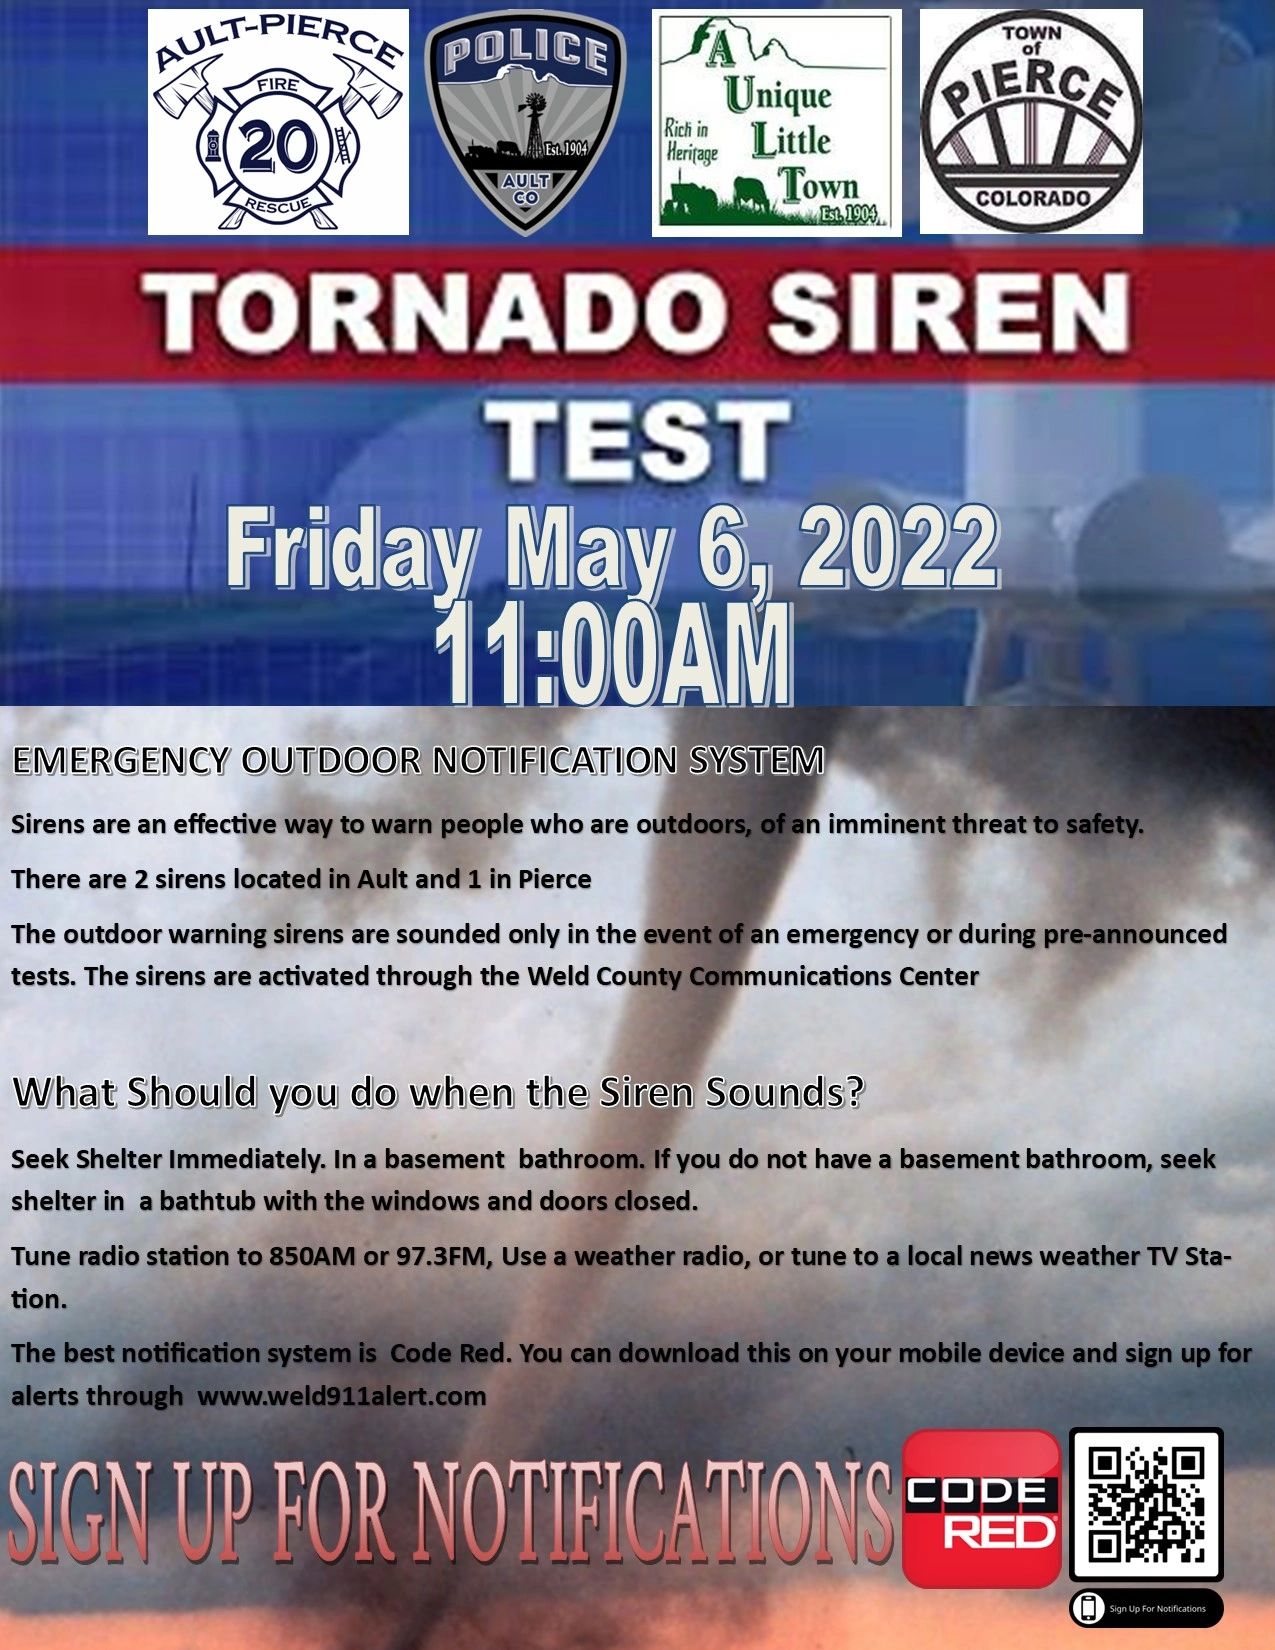 Tornado Siren Testing Friday May 6, 2022 1100AM